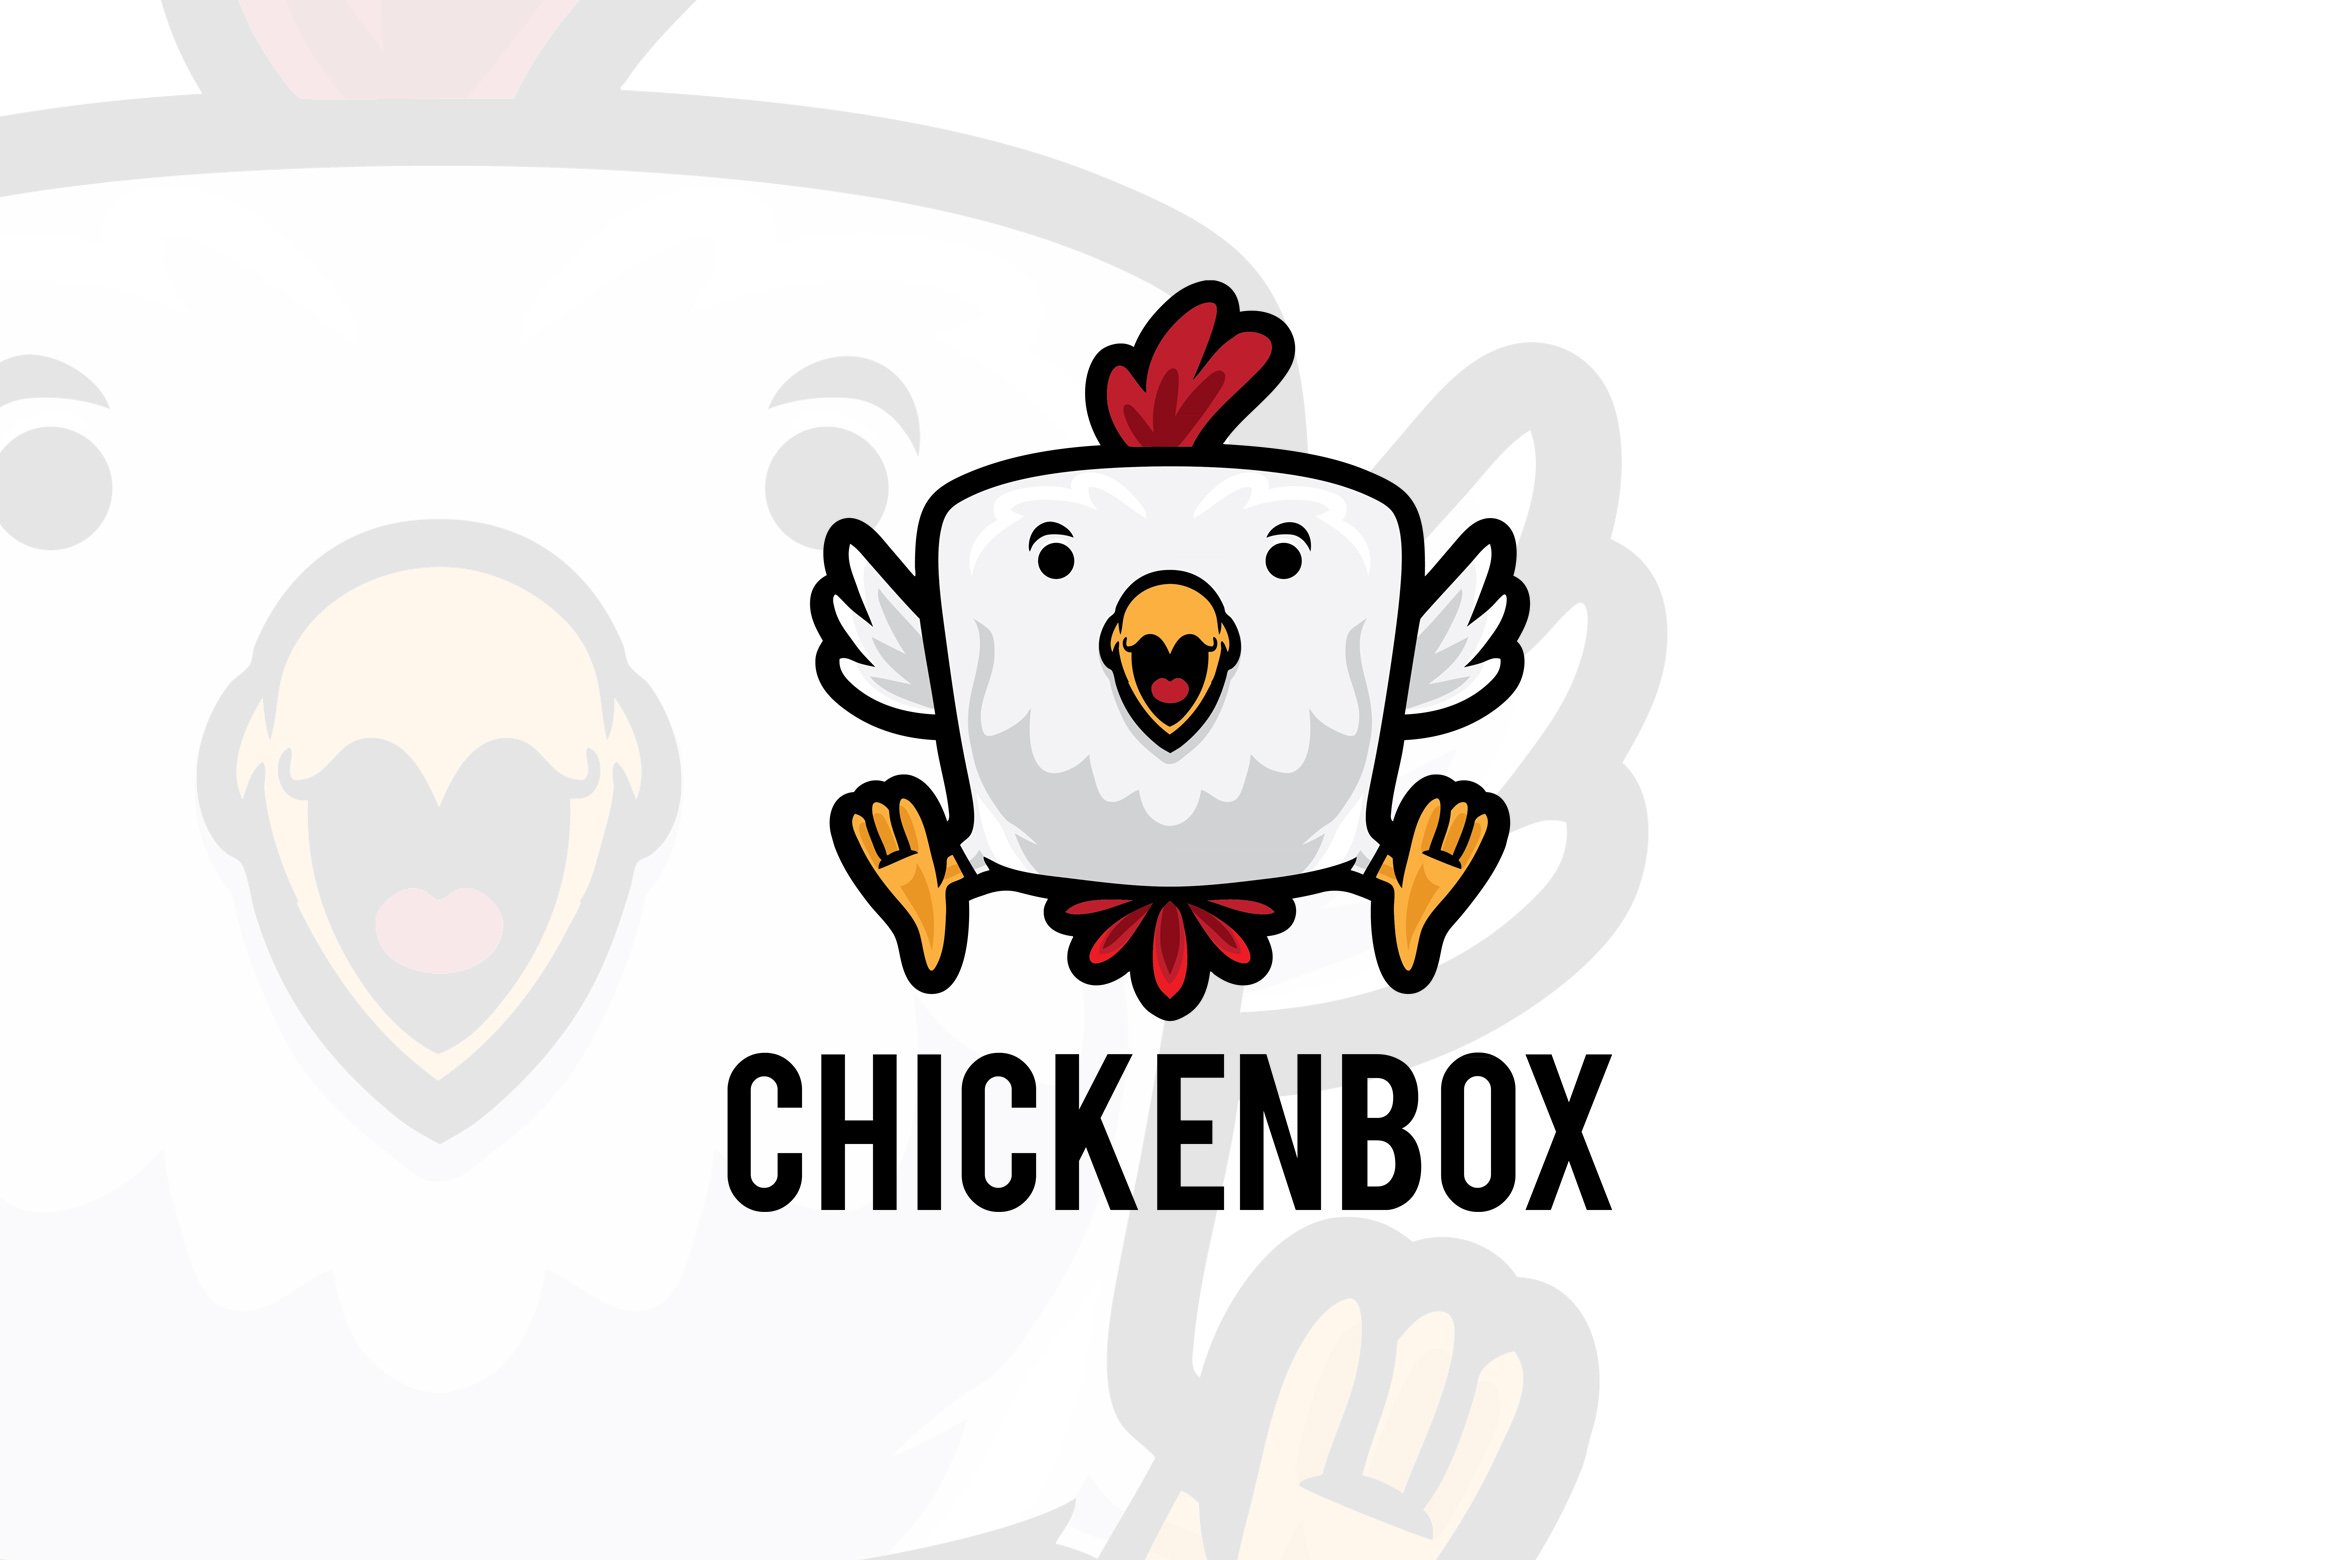 Chicken Box Cartoon Logo Mascot cover image.